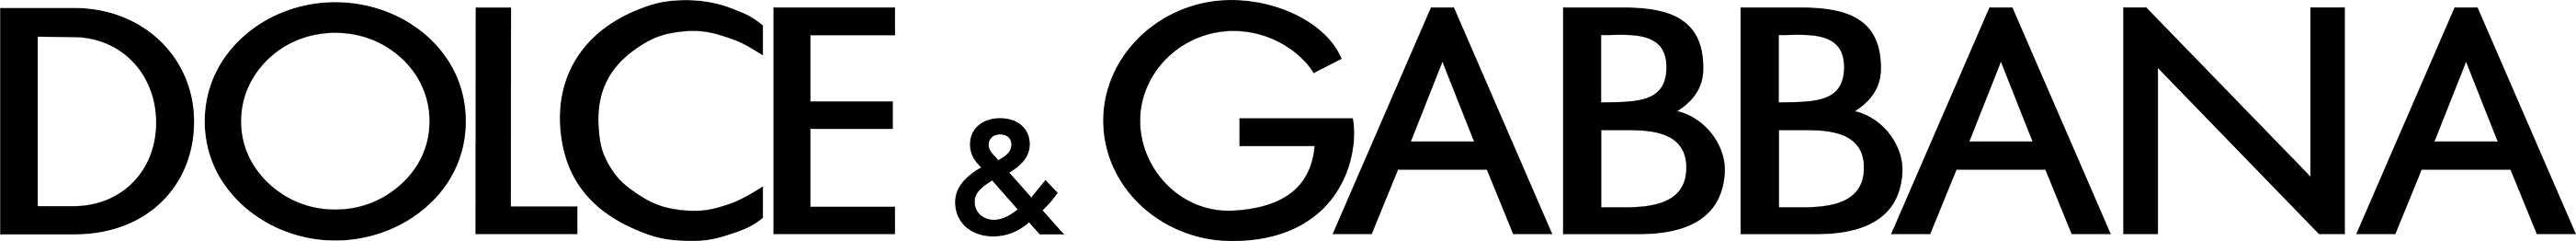 Logotipo De Dolce Gabbana Png